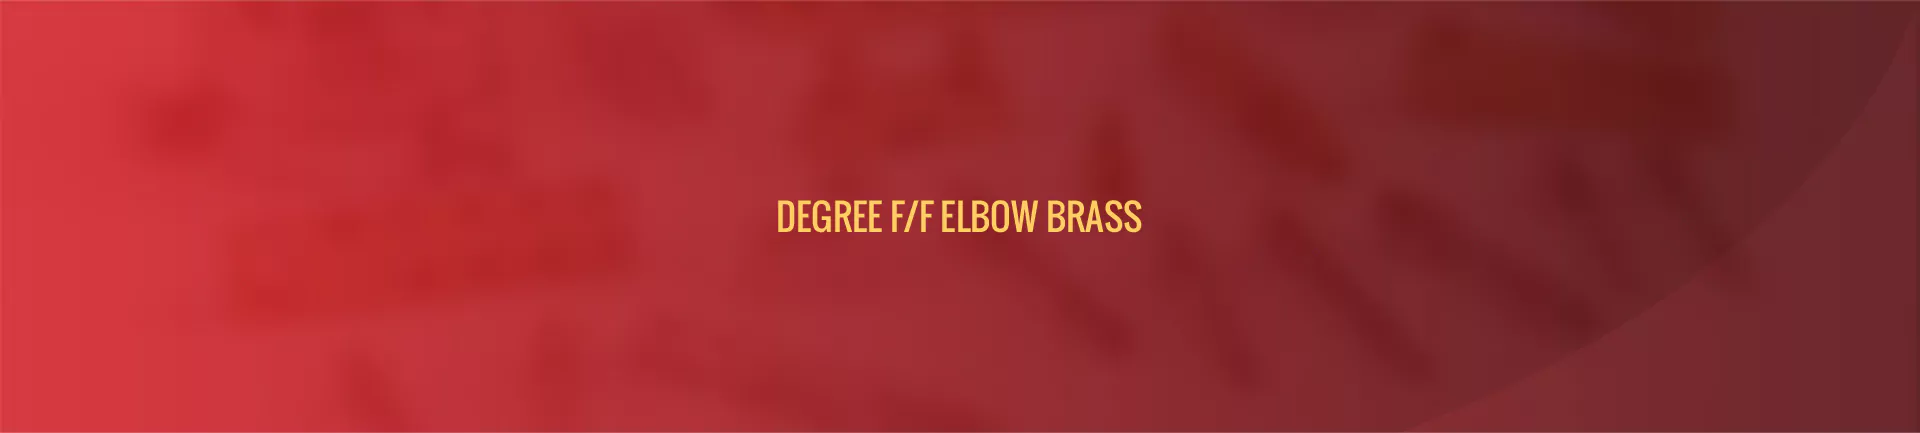 degree_ff_elboe_brass-banner-banner